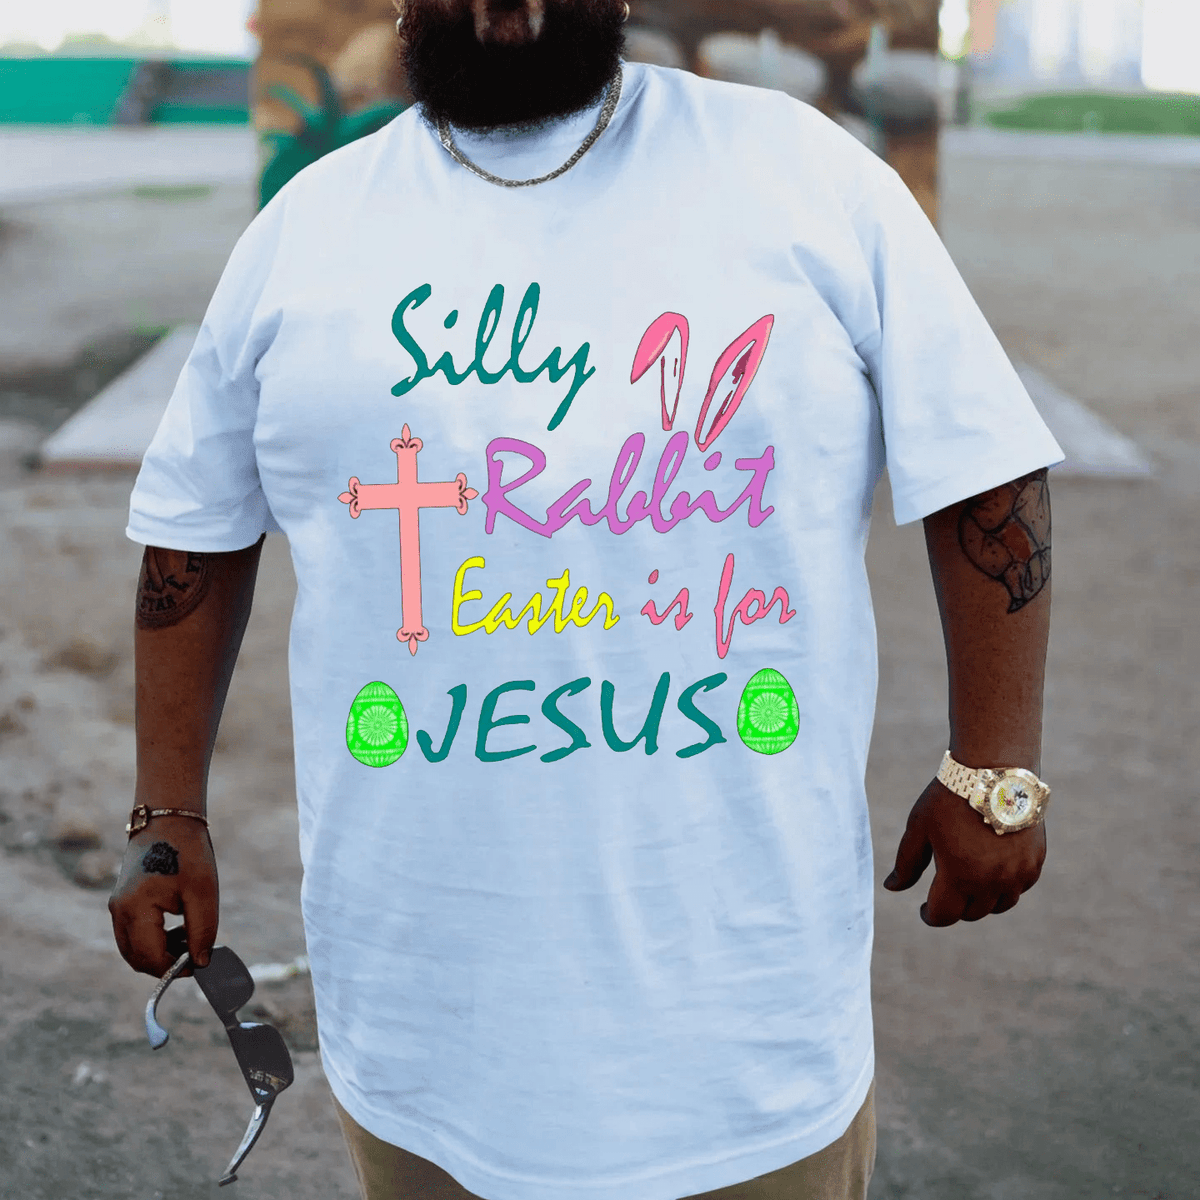 Stupid Rabbit Is for Jesus Plus Size T-shirt